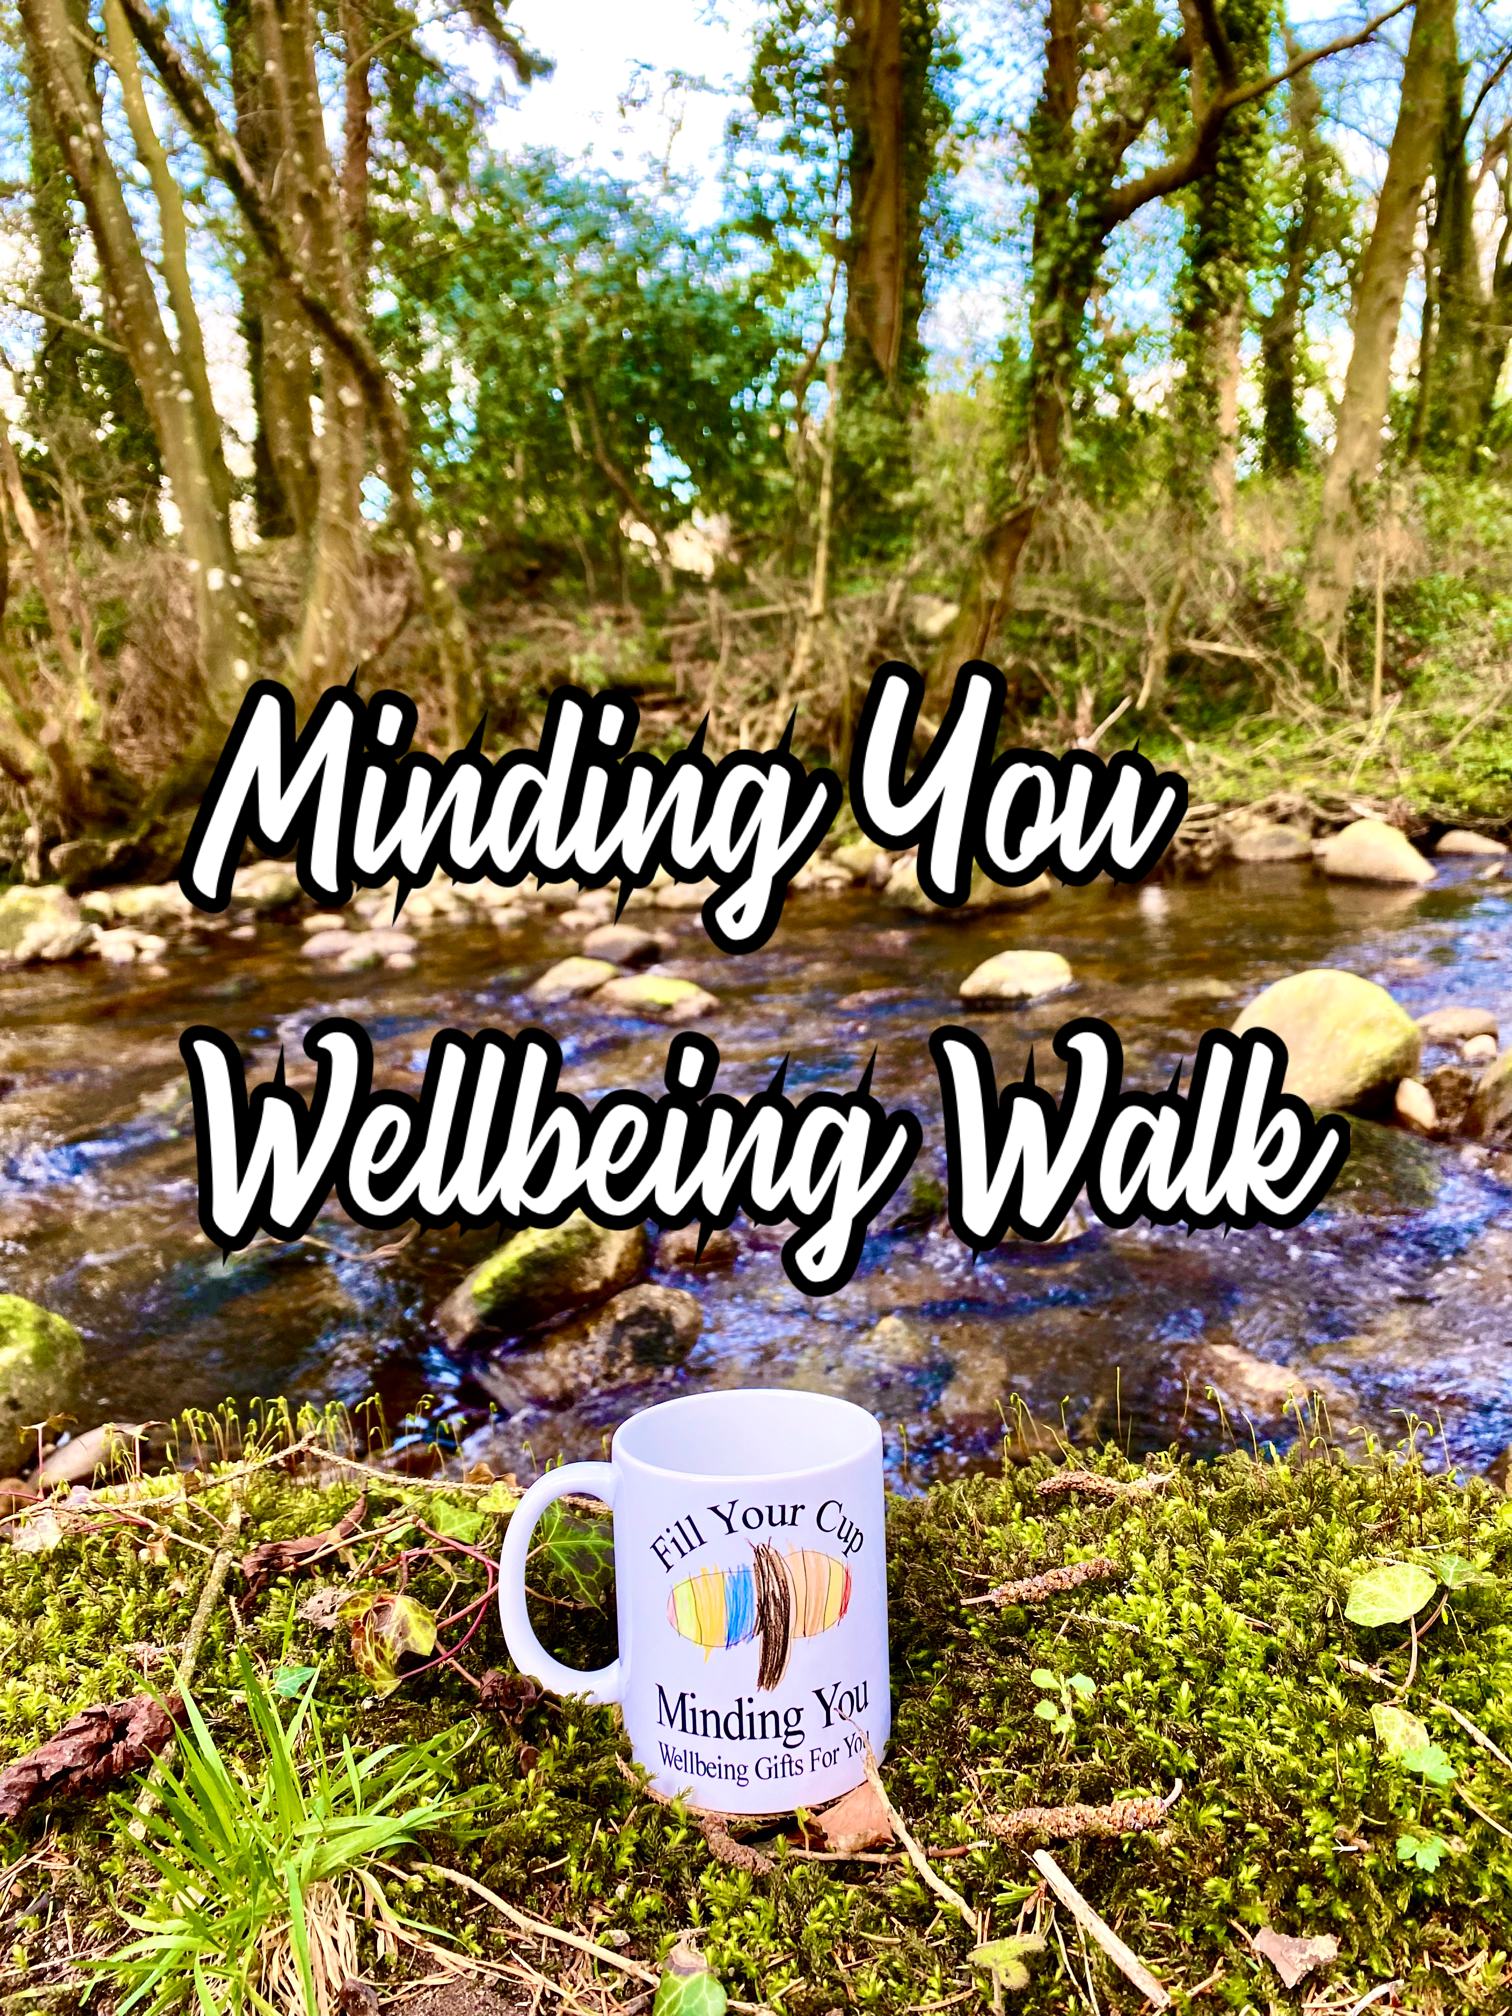 Minding You Wellbeing Walk